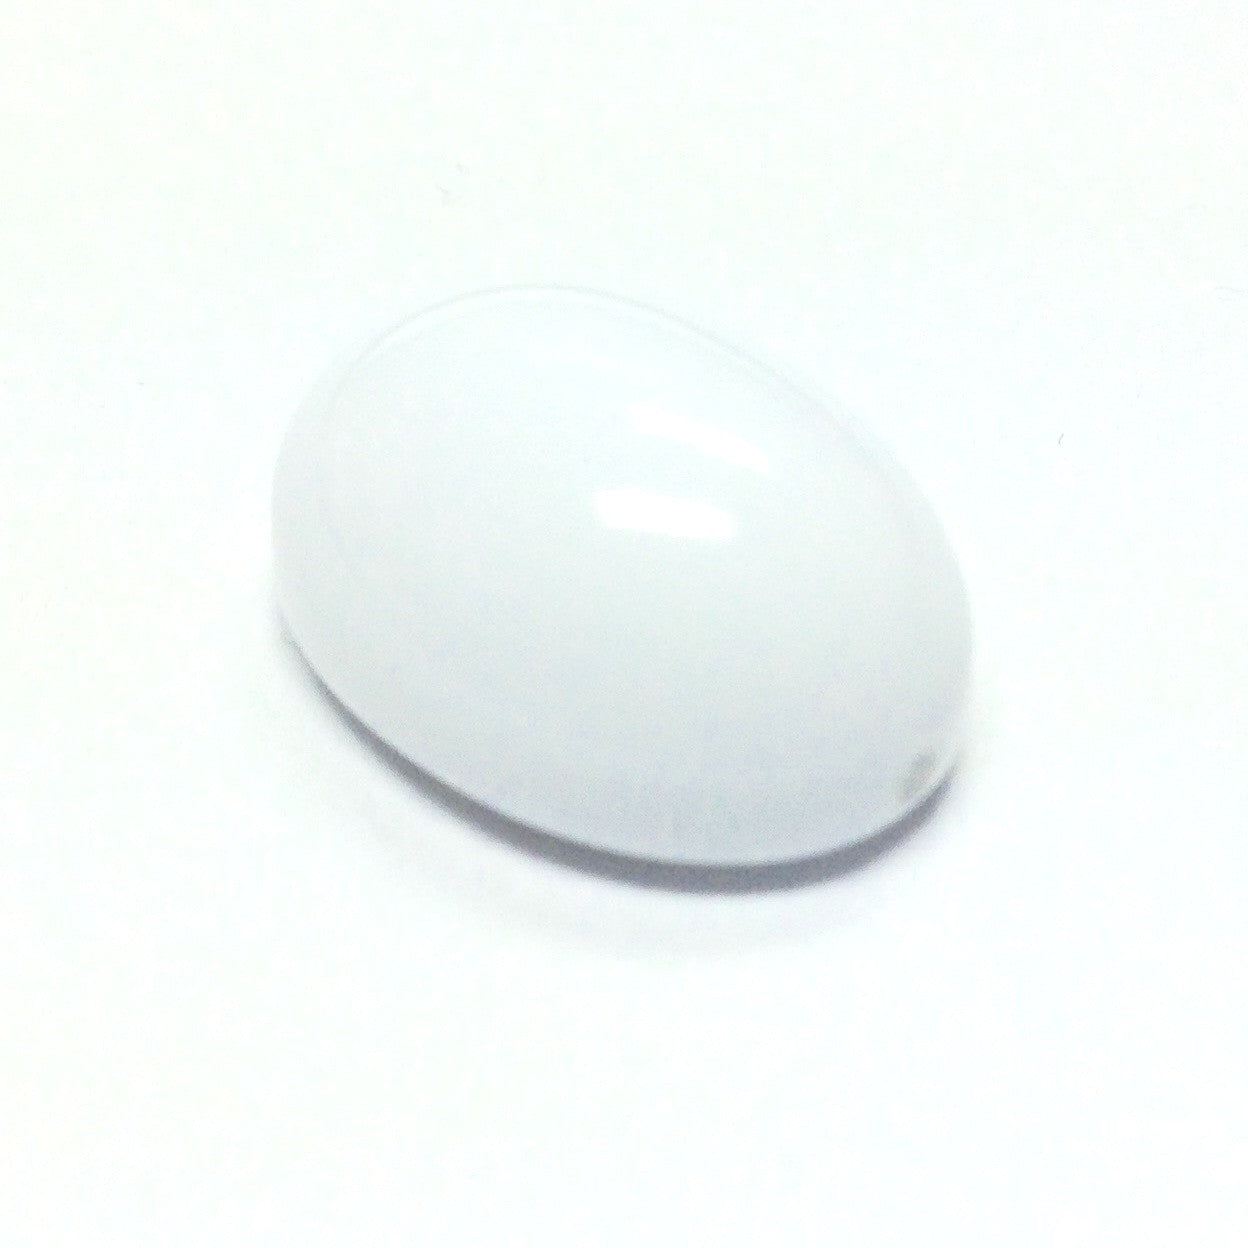 14X10MM White Oval Flatback Bead (72 pieces)